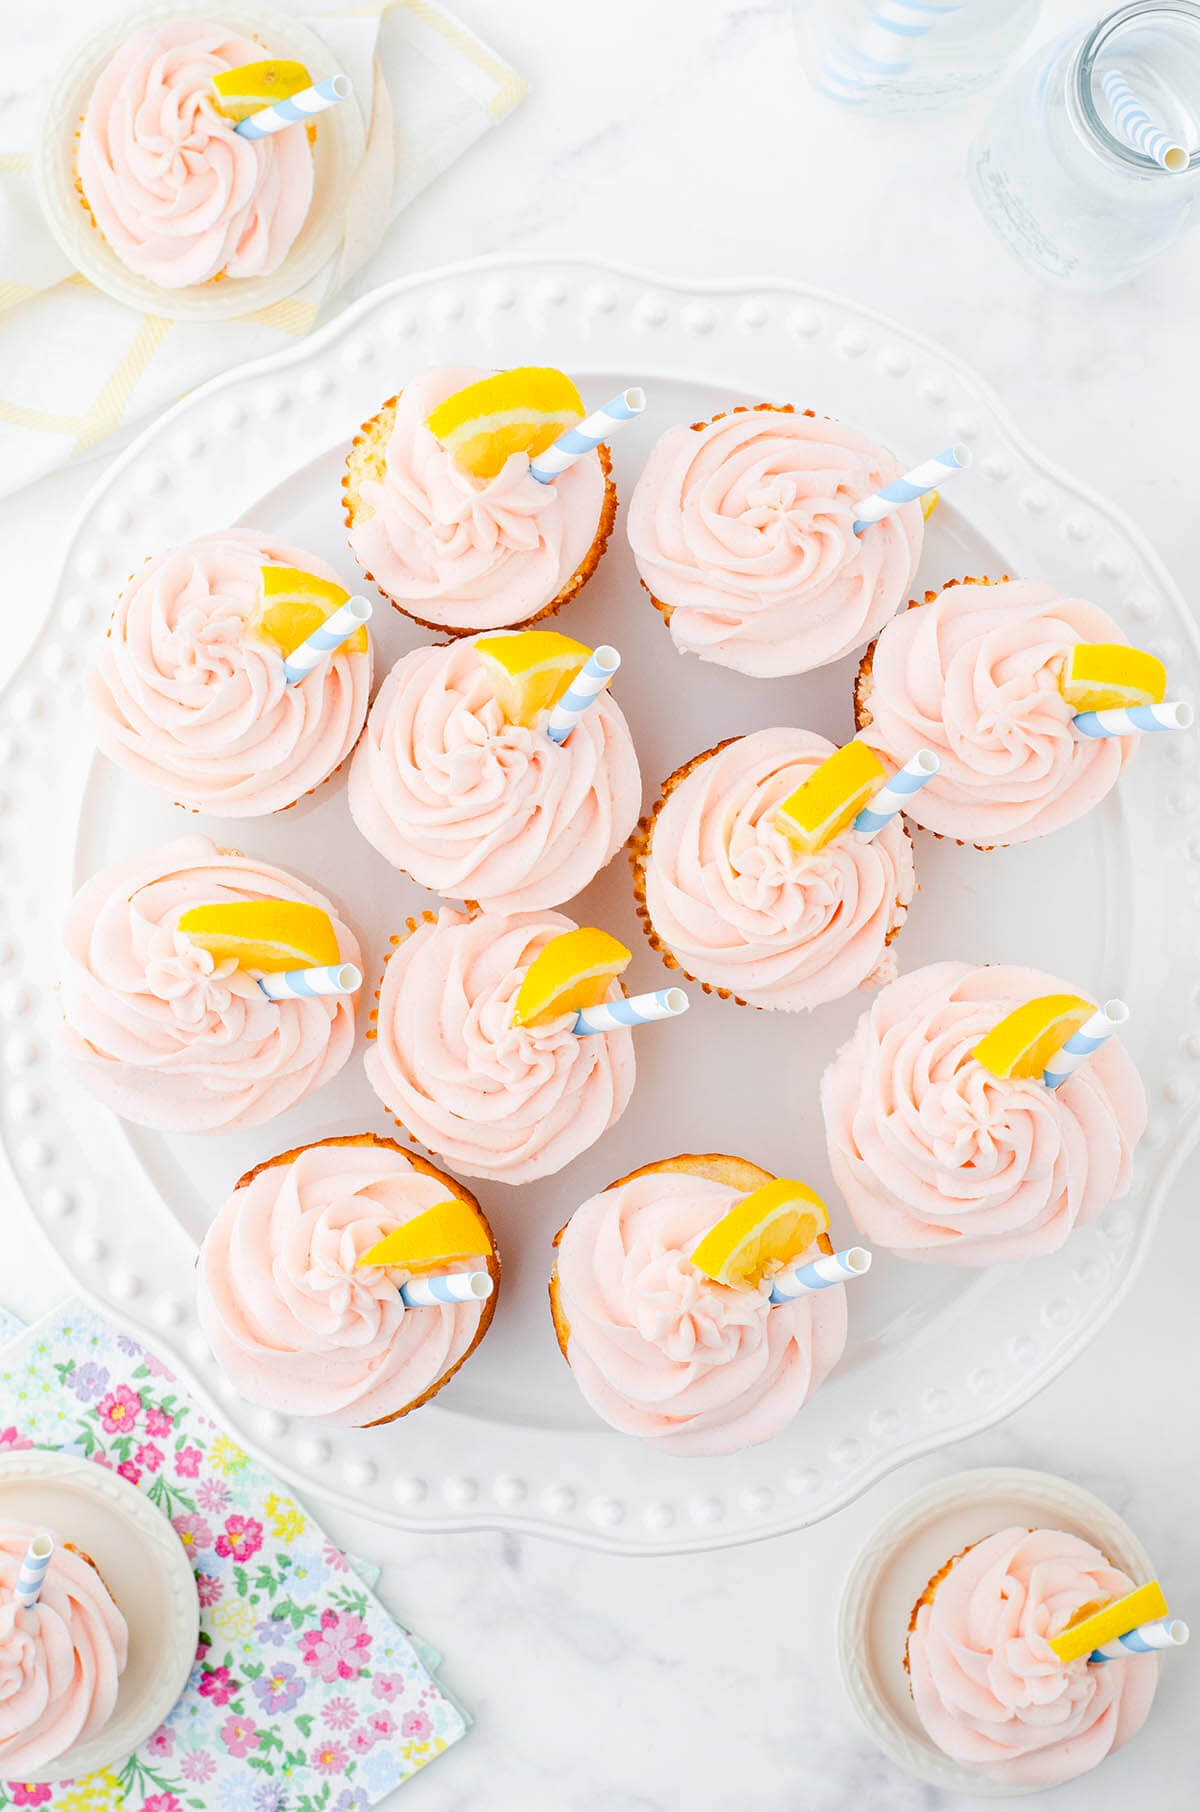 Pink lemonade cupcakes arranged around a cake platter.